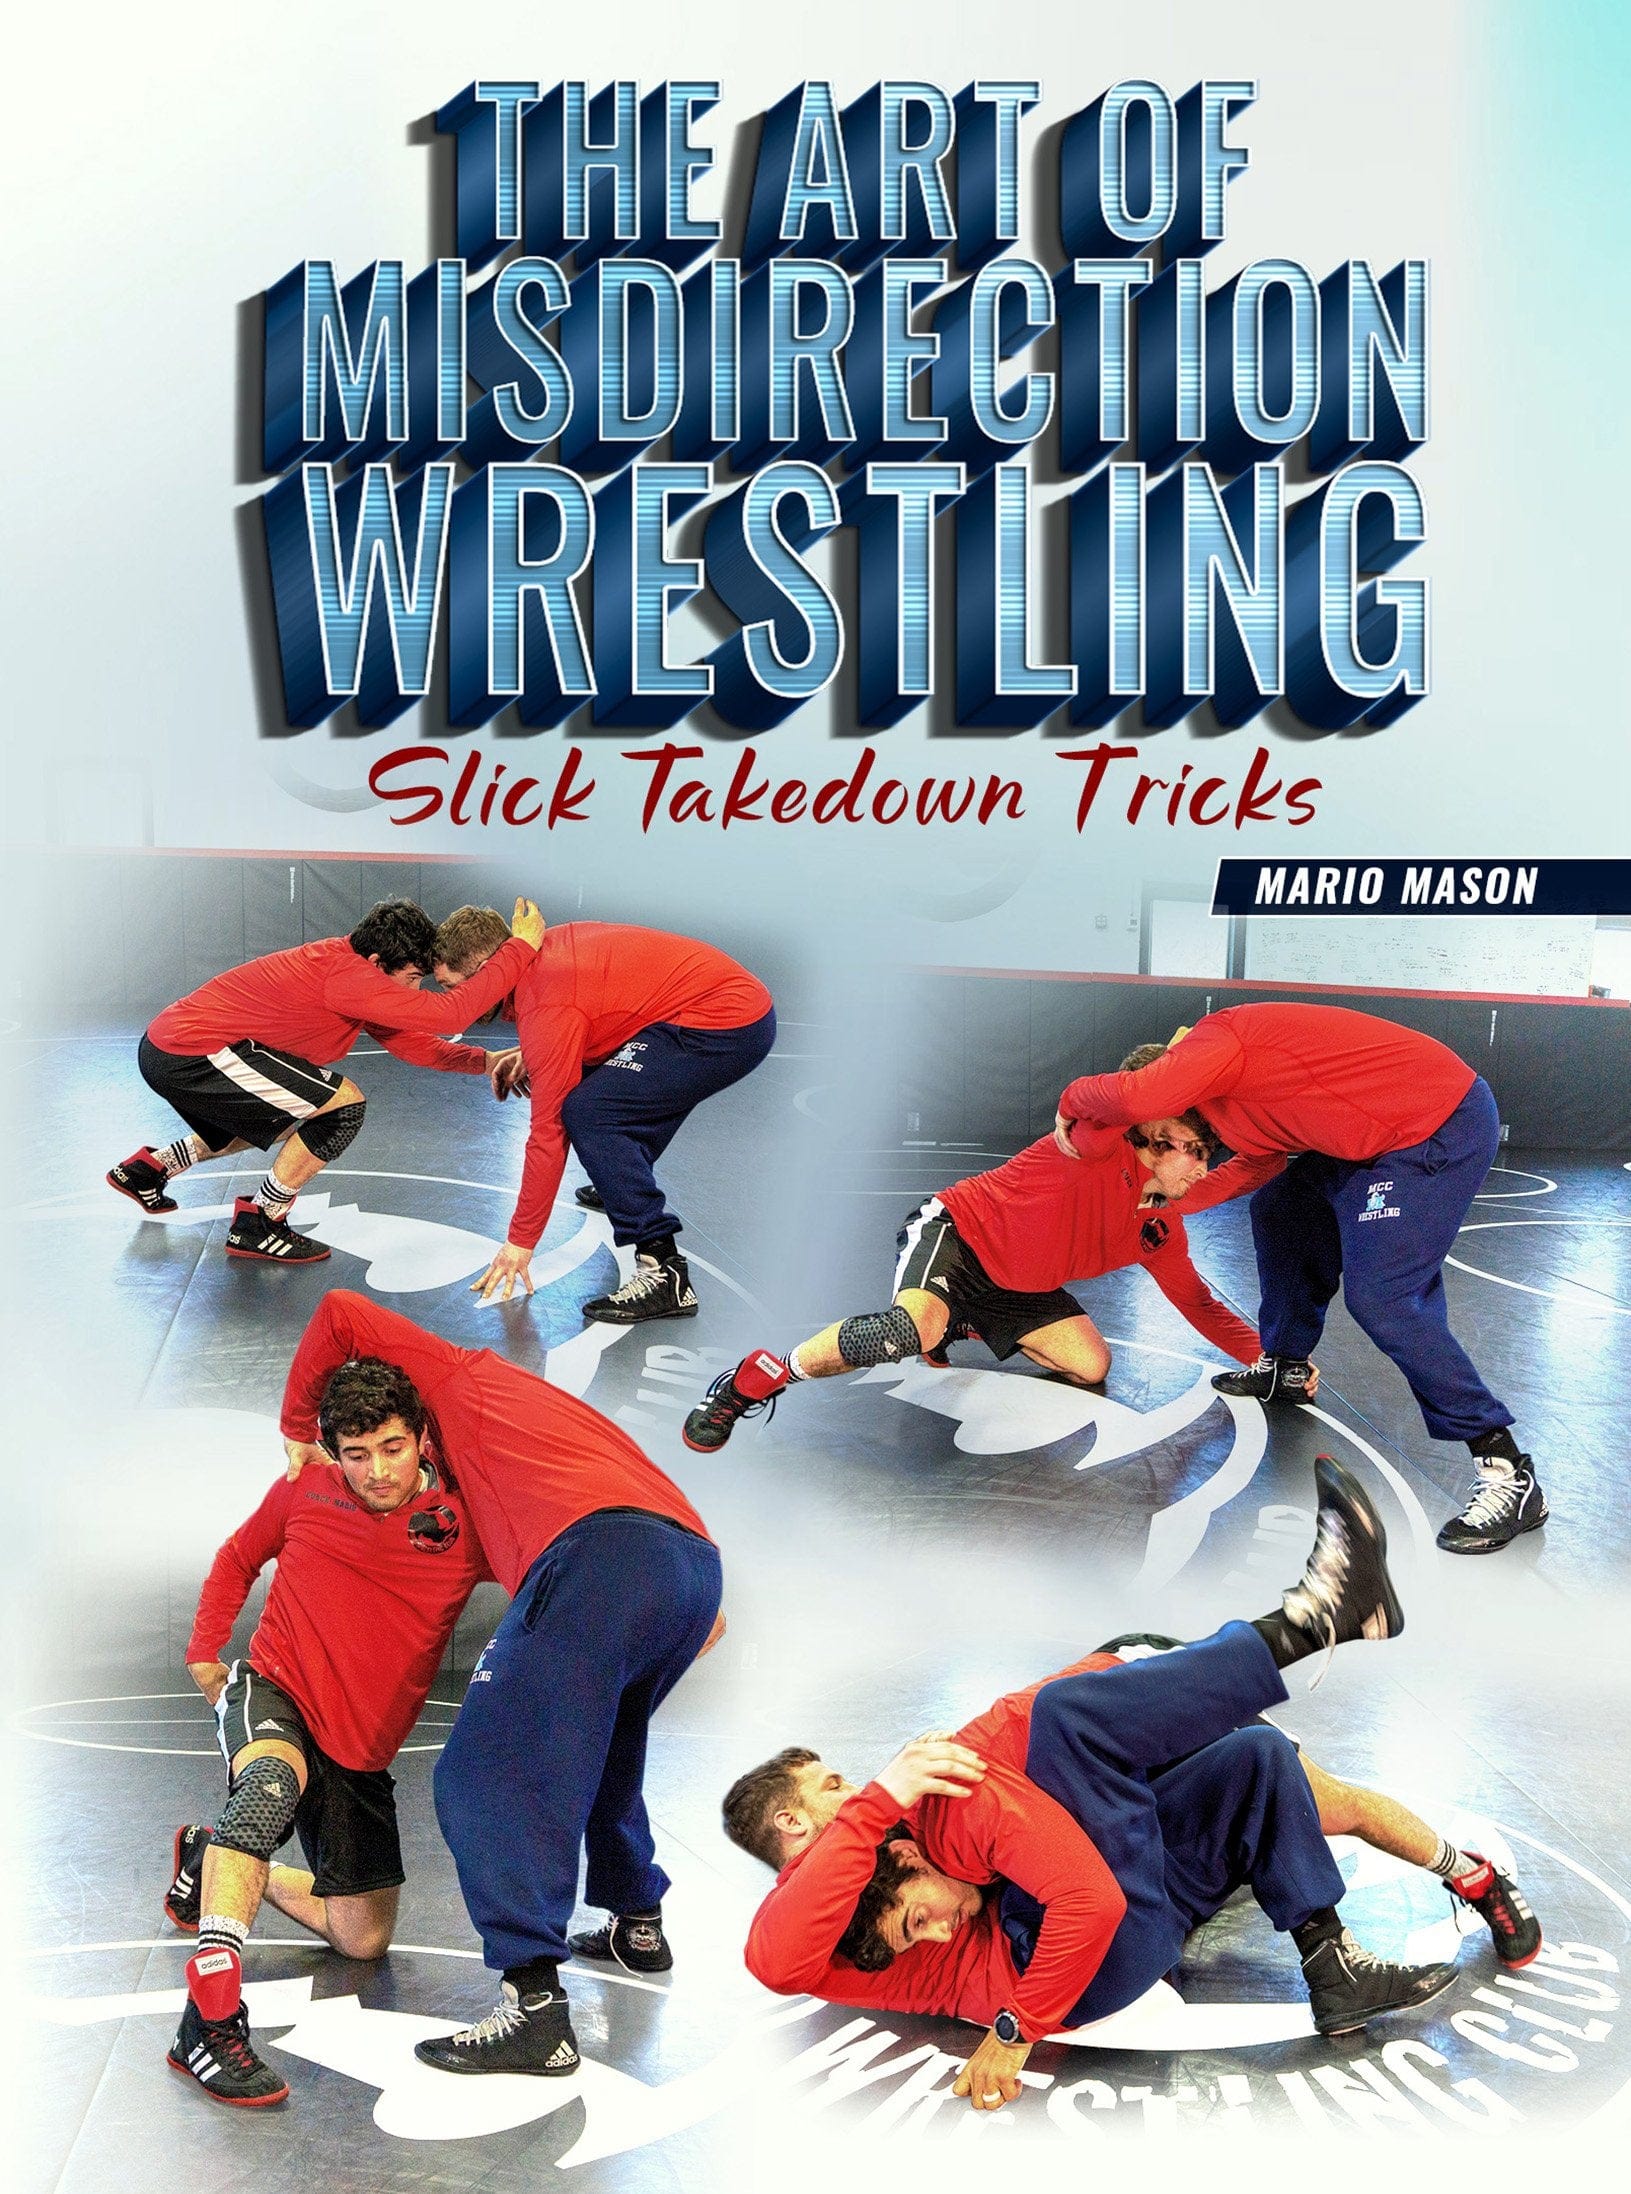 The Art of Misdirection Wrestling by Mario Mason - Fanatic Wrestling